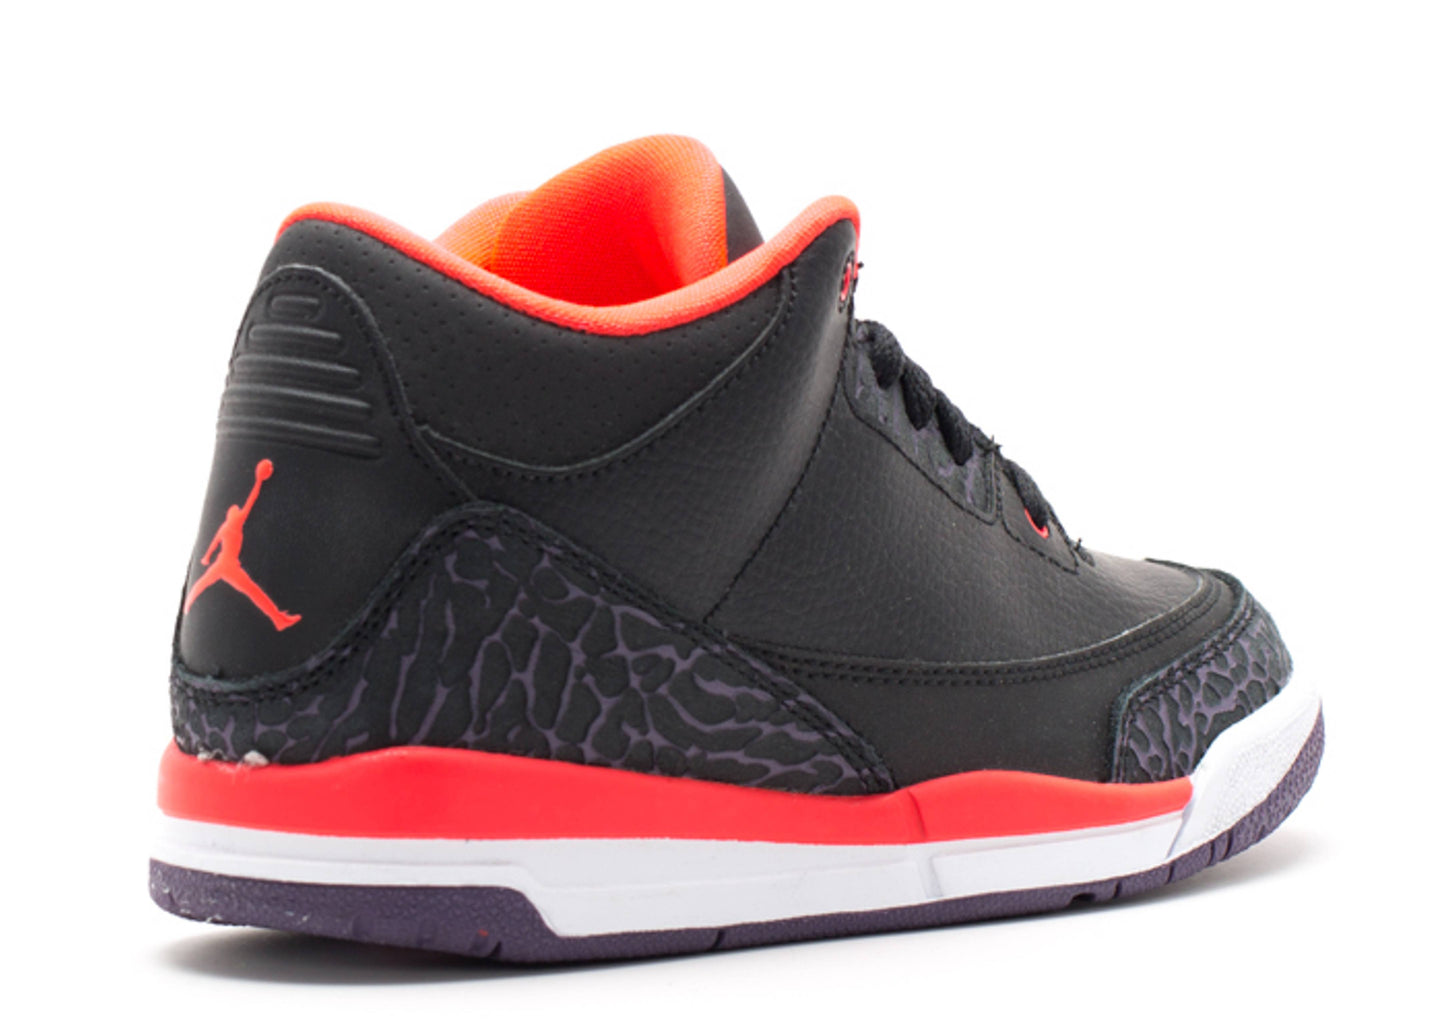 Air Jordan 3 Retro PS "Black Crimson"